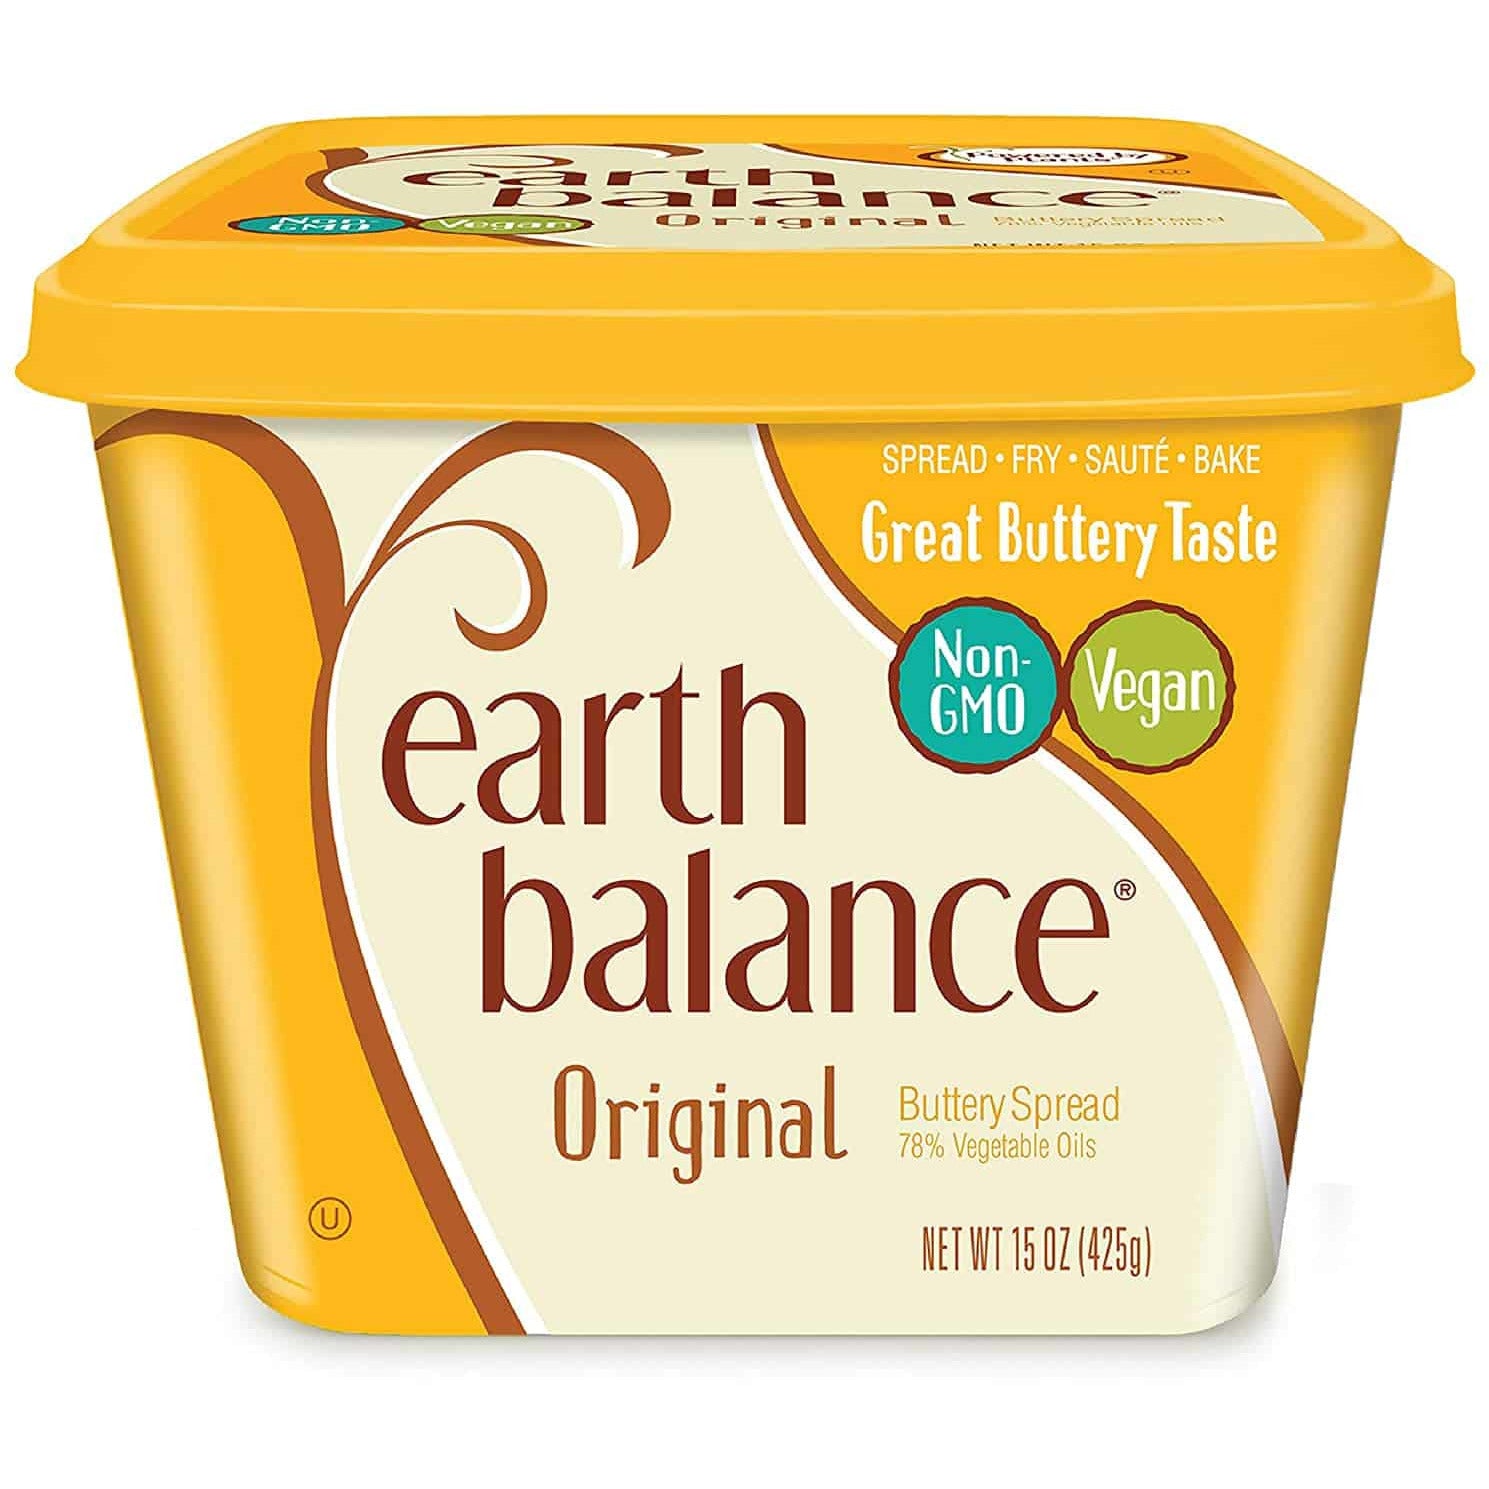 Oasis Fresh Earth Balance Original Dairy Free Buttery Spread, 15 oz